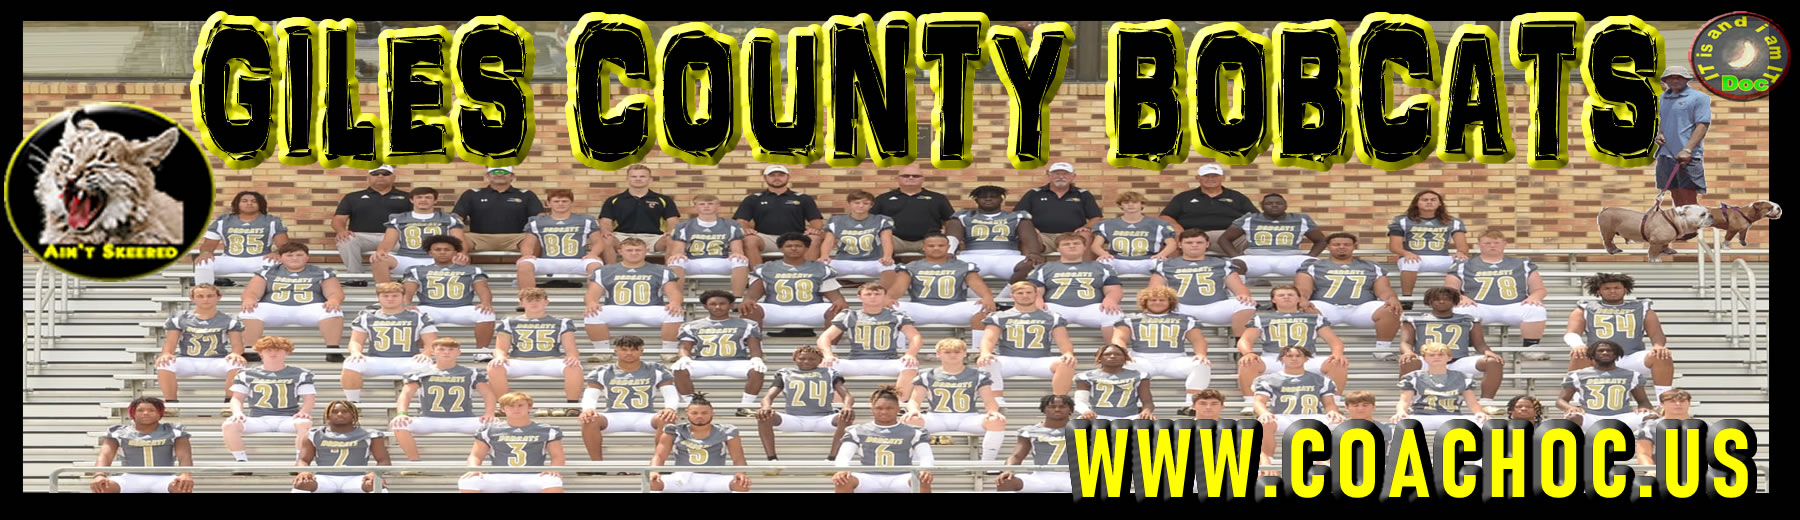 Giles County Bobcats Football and Coach OCs Website for High School Football